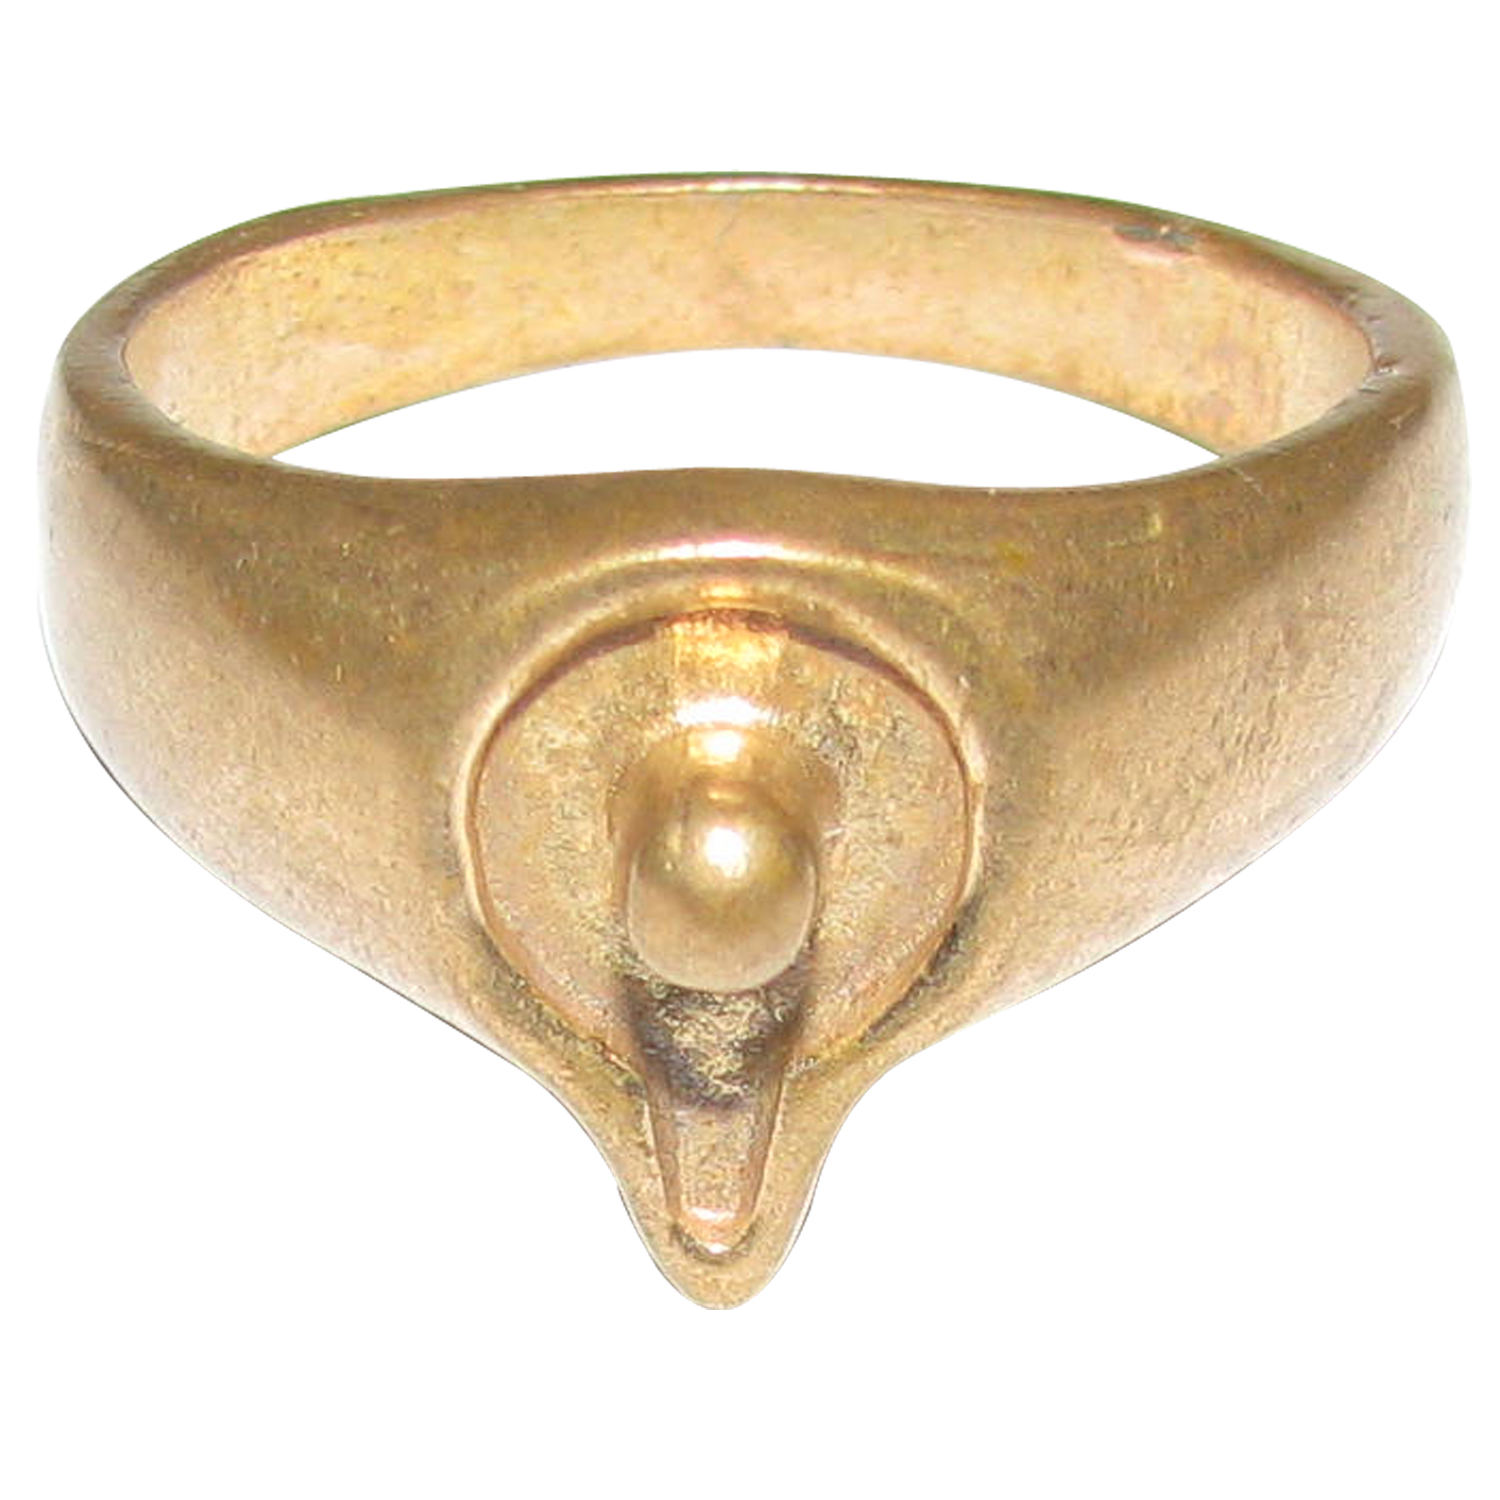 Copper Snake Ring Adjustable Health For Kaal Sarp Dosh Finger Ring Healing  | eBay